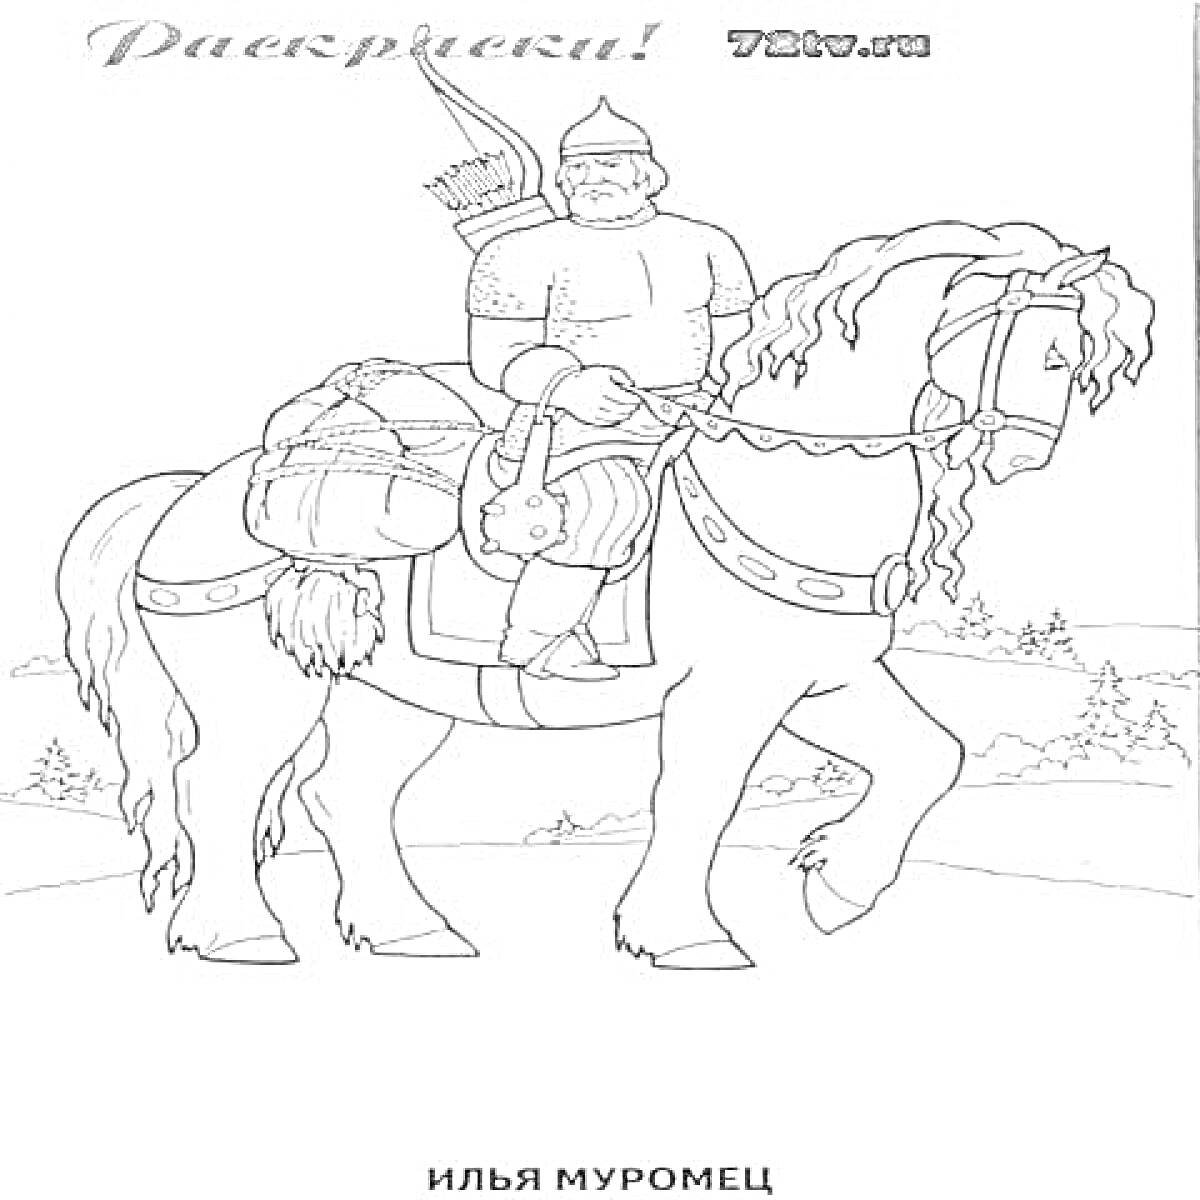 Раскраска Илья Муромец на коне со снаряжением на фоне леса